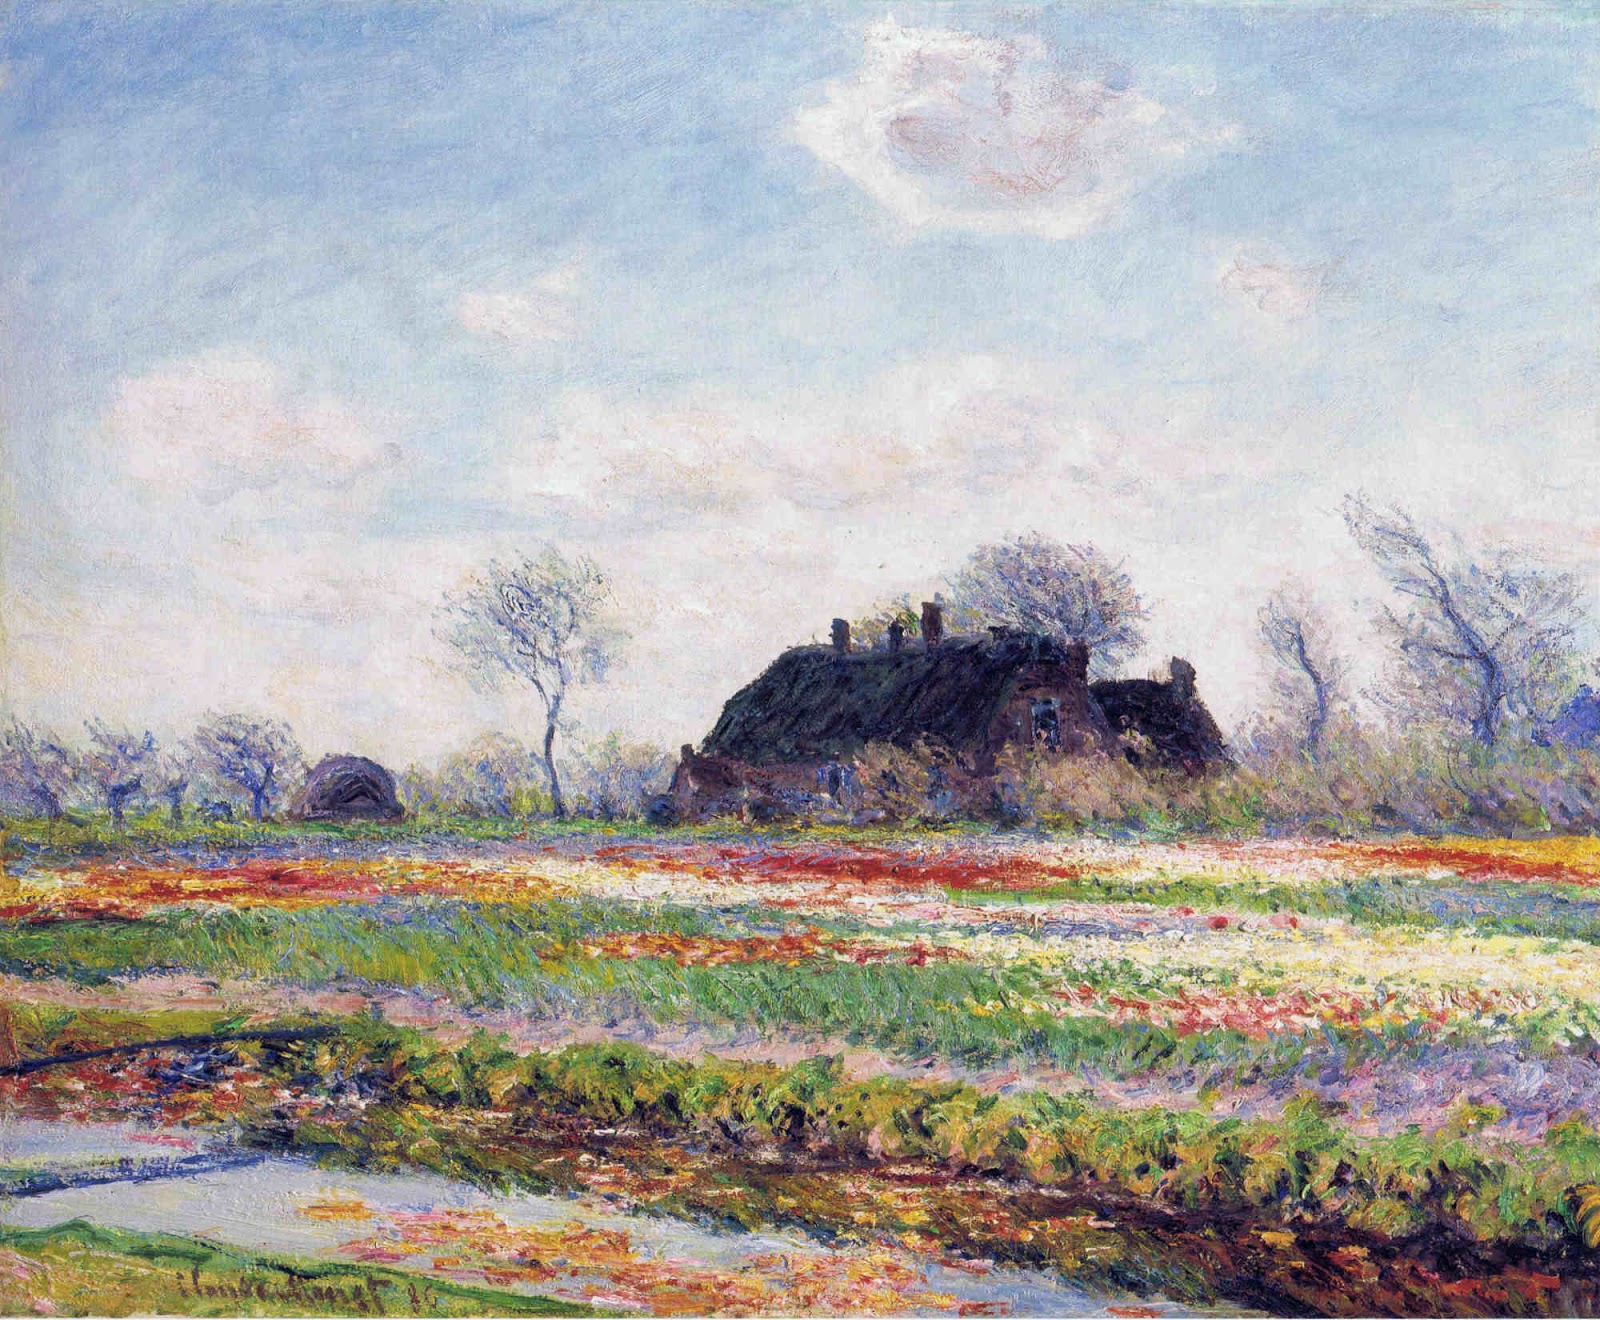 Claude+Monet-1840-1926 (848).jpg